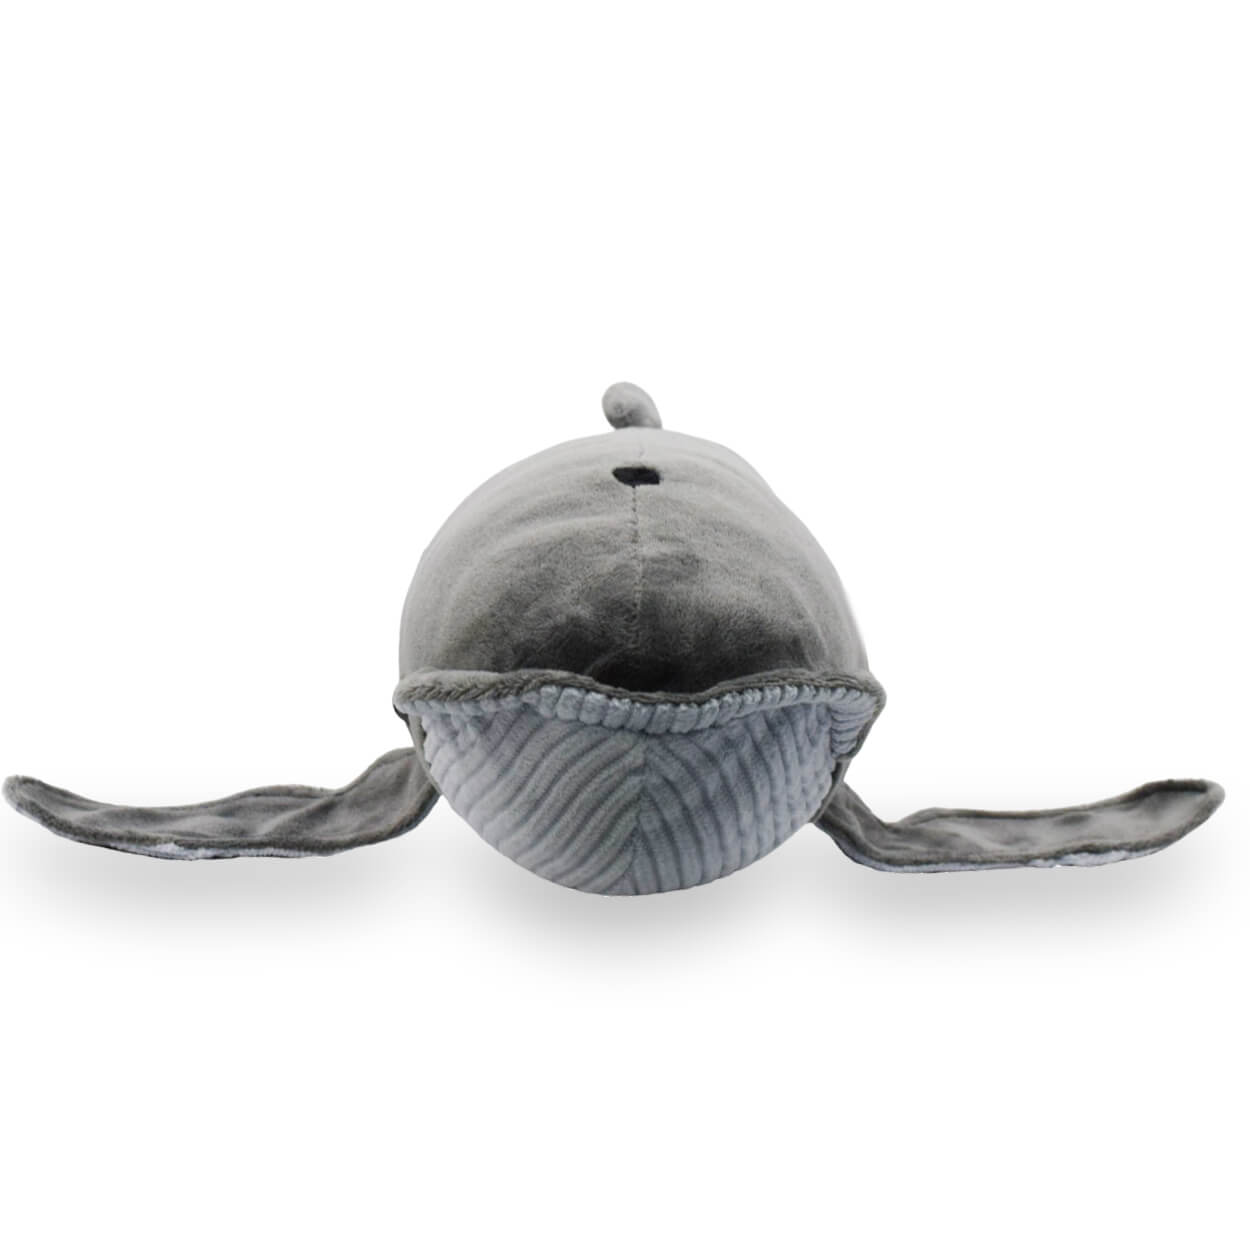 Realistic Baleen Whales Stuffed Animal Plush Toy